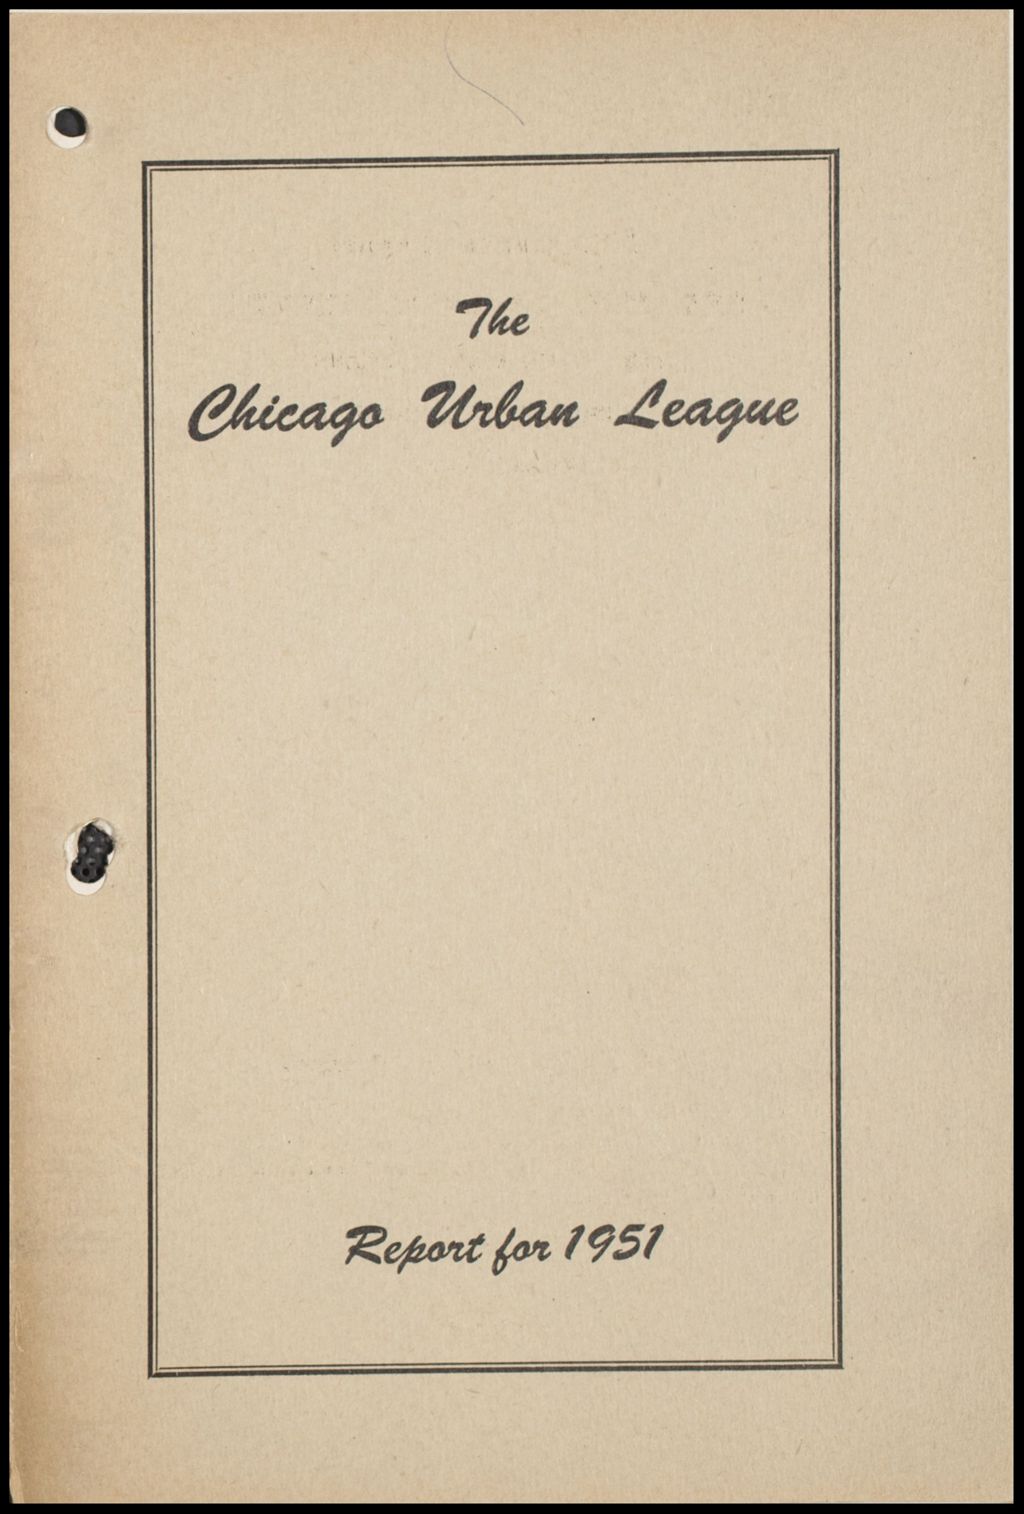 Miniature of Chicago Urban League report, 1951 (Folder I-23)